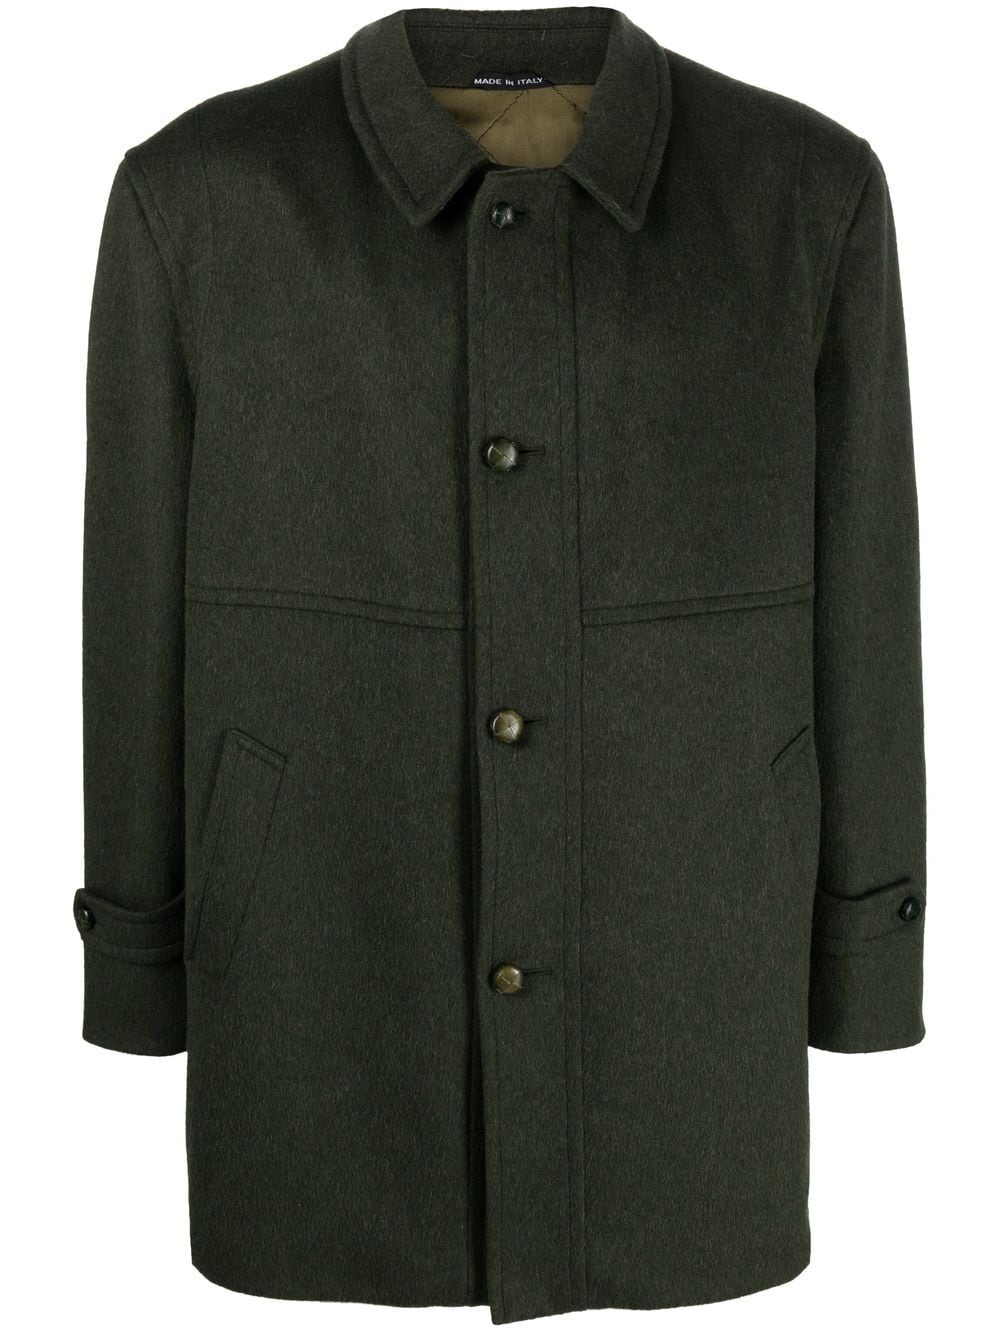 1990s classic collar wool jacket